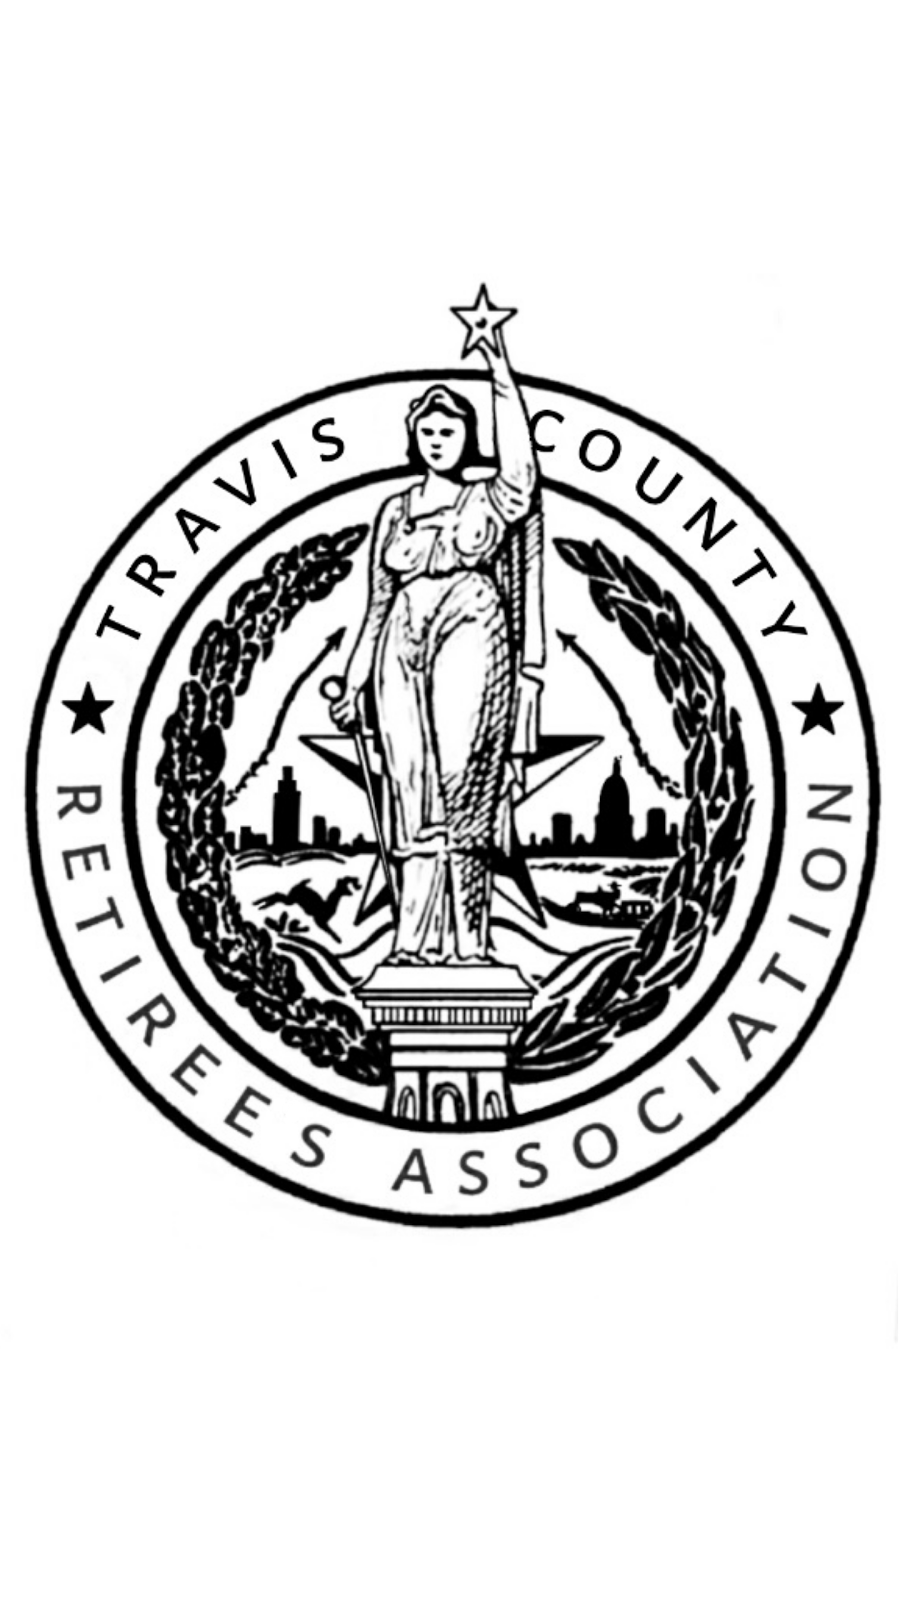 Travis County Retirees Association